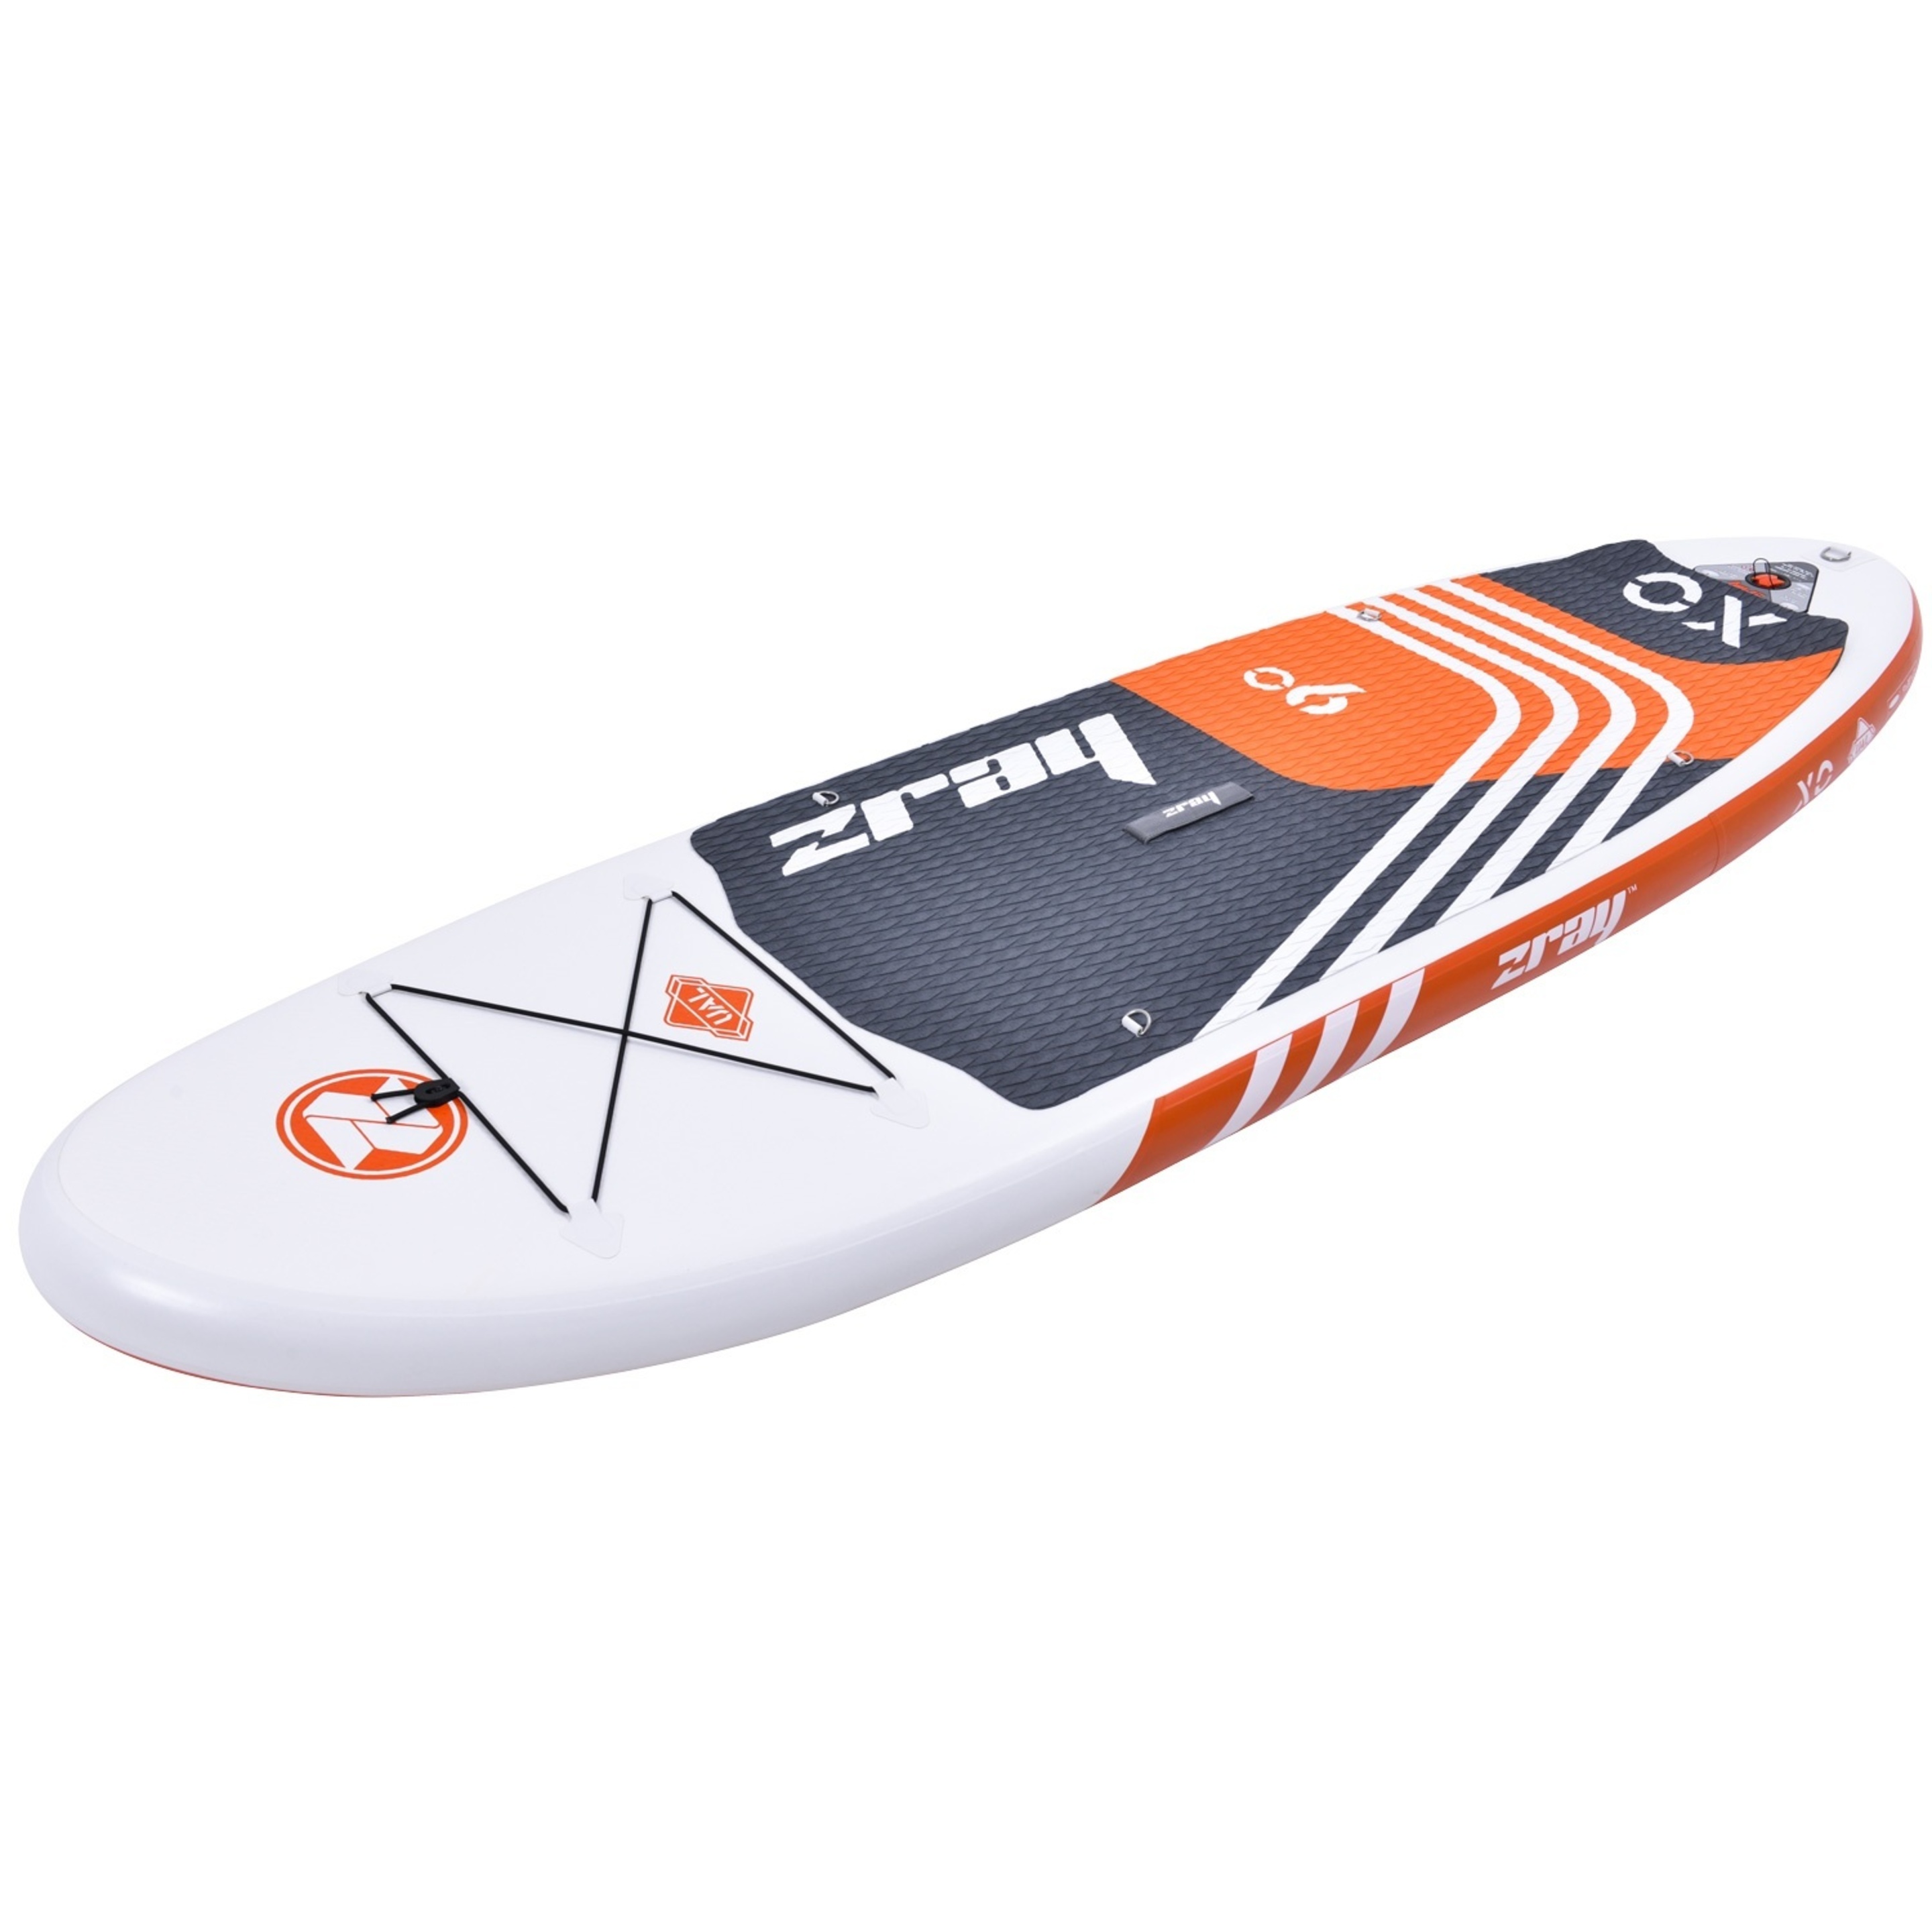 Tabla Paddle Surf Hinchable Zray X0 X-rider 9' - Zray  MKP